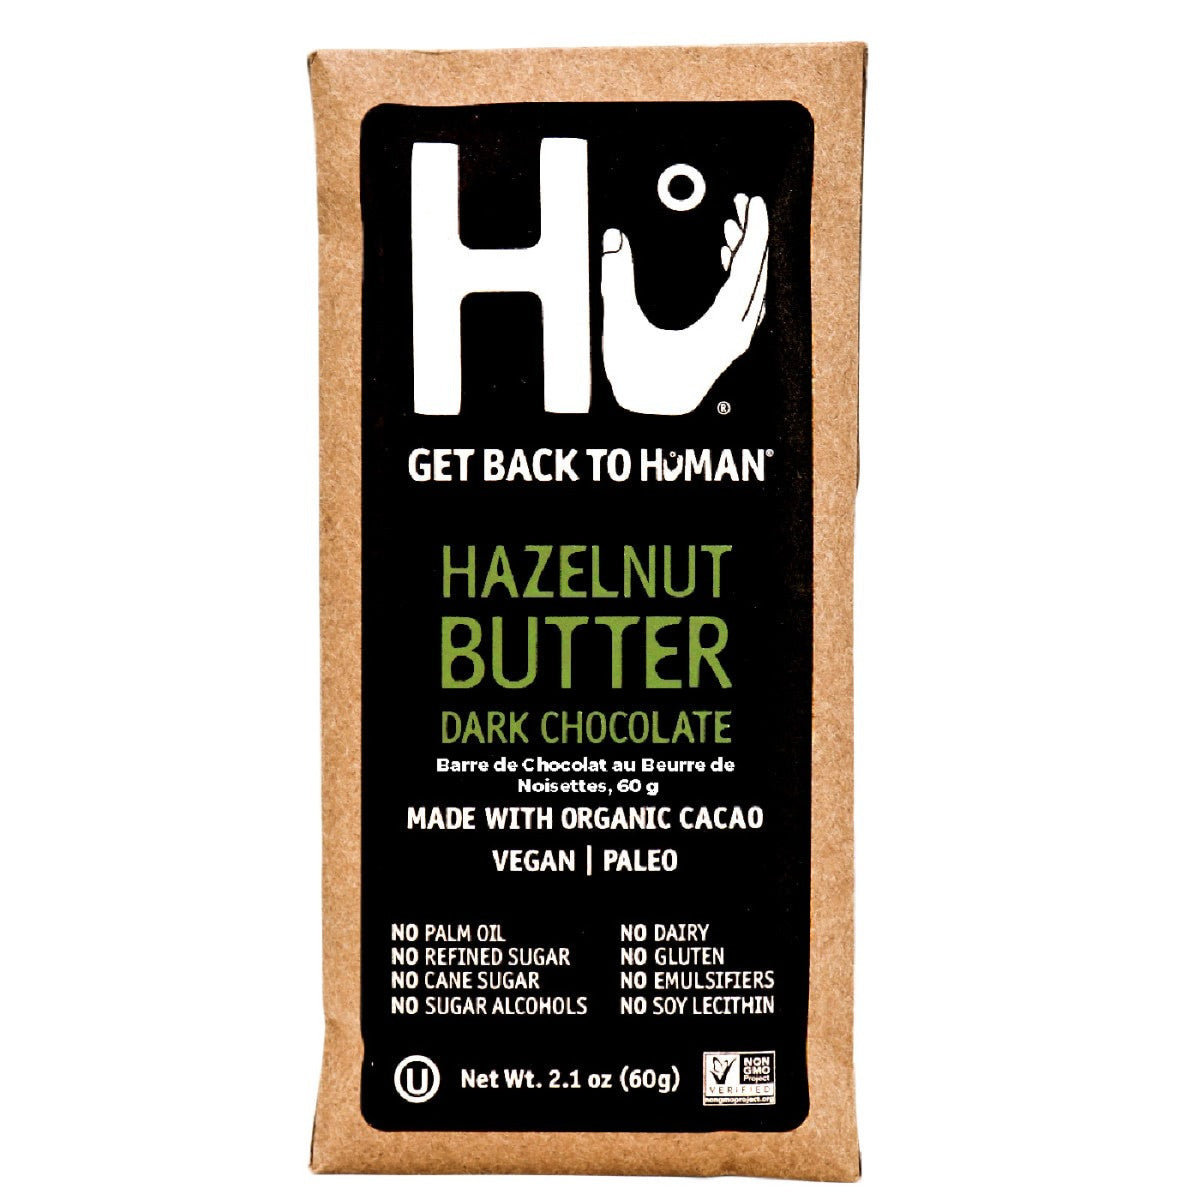 Hazelnut Butter Dark Chocolate by Hu, 60g